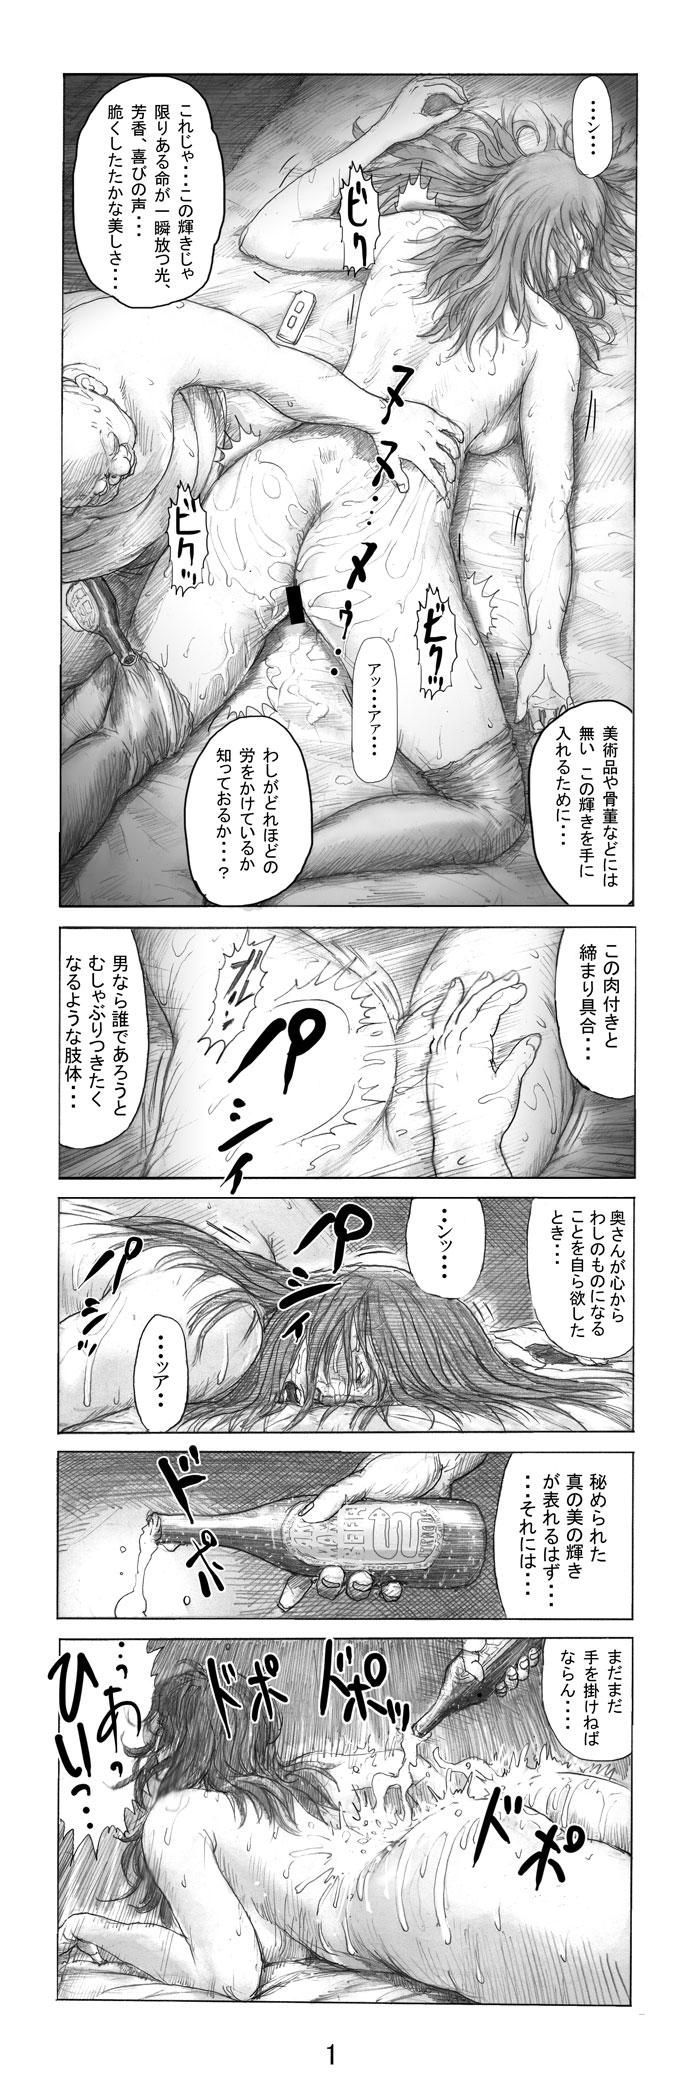 Infiel Utsukushii no Shingen Part 3 Outside - Page 2